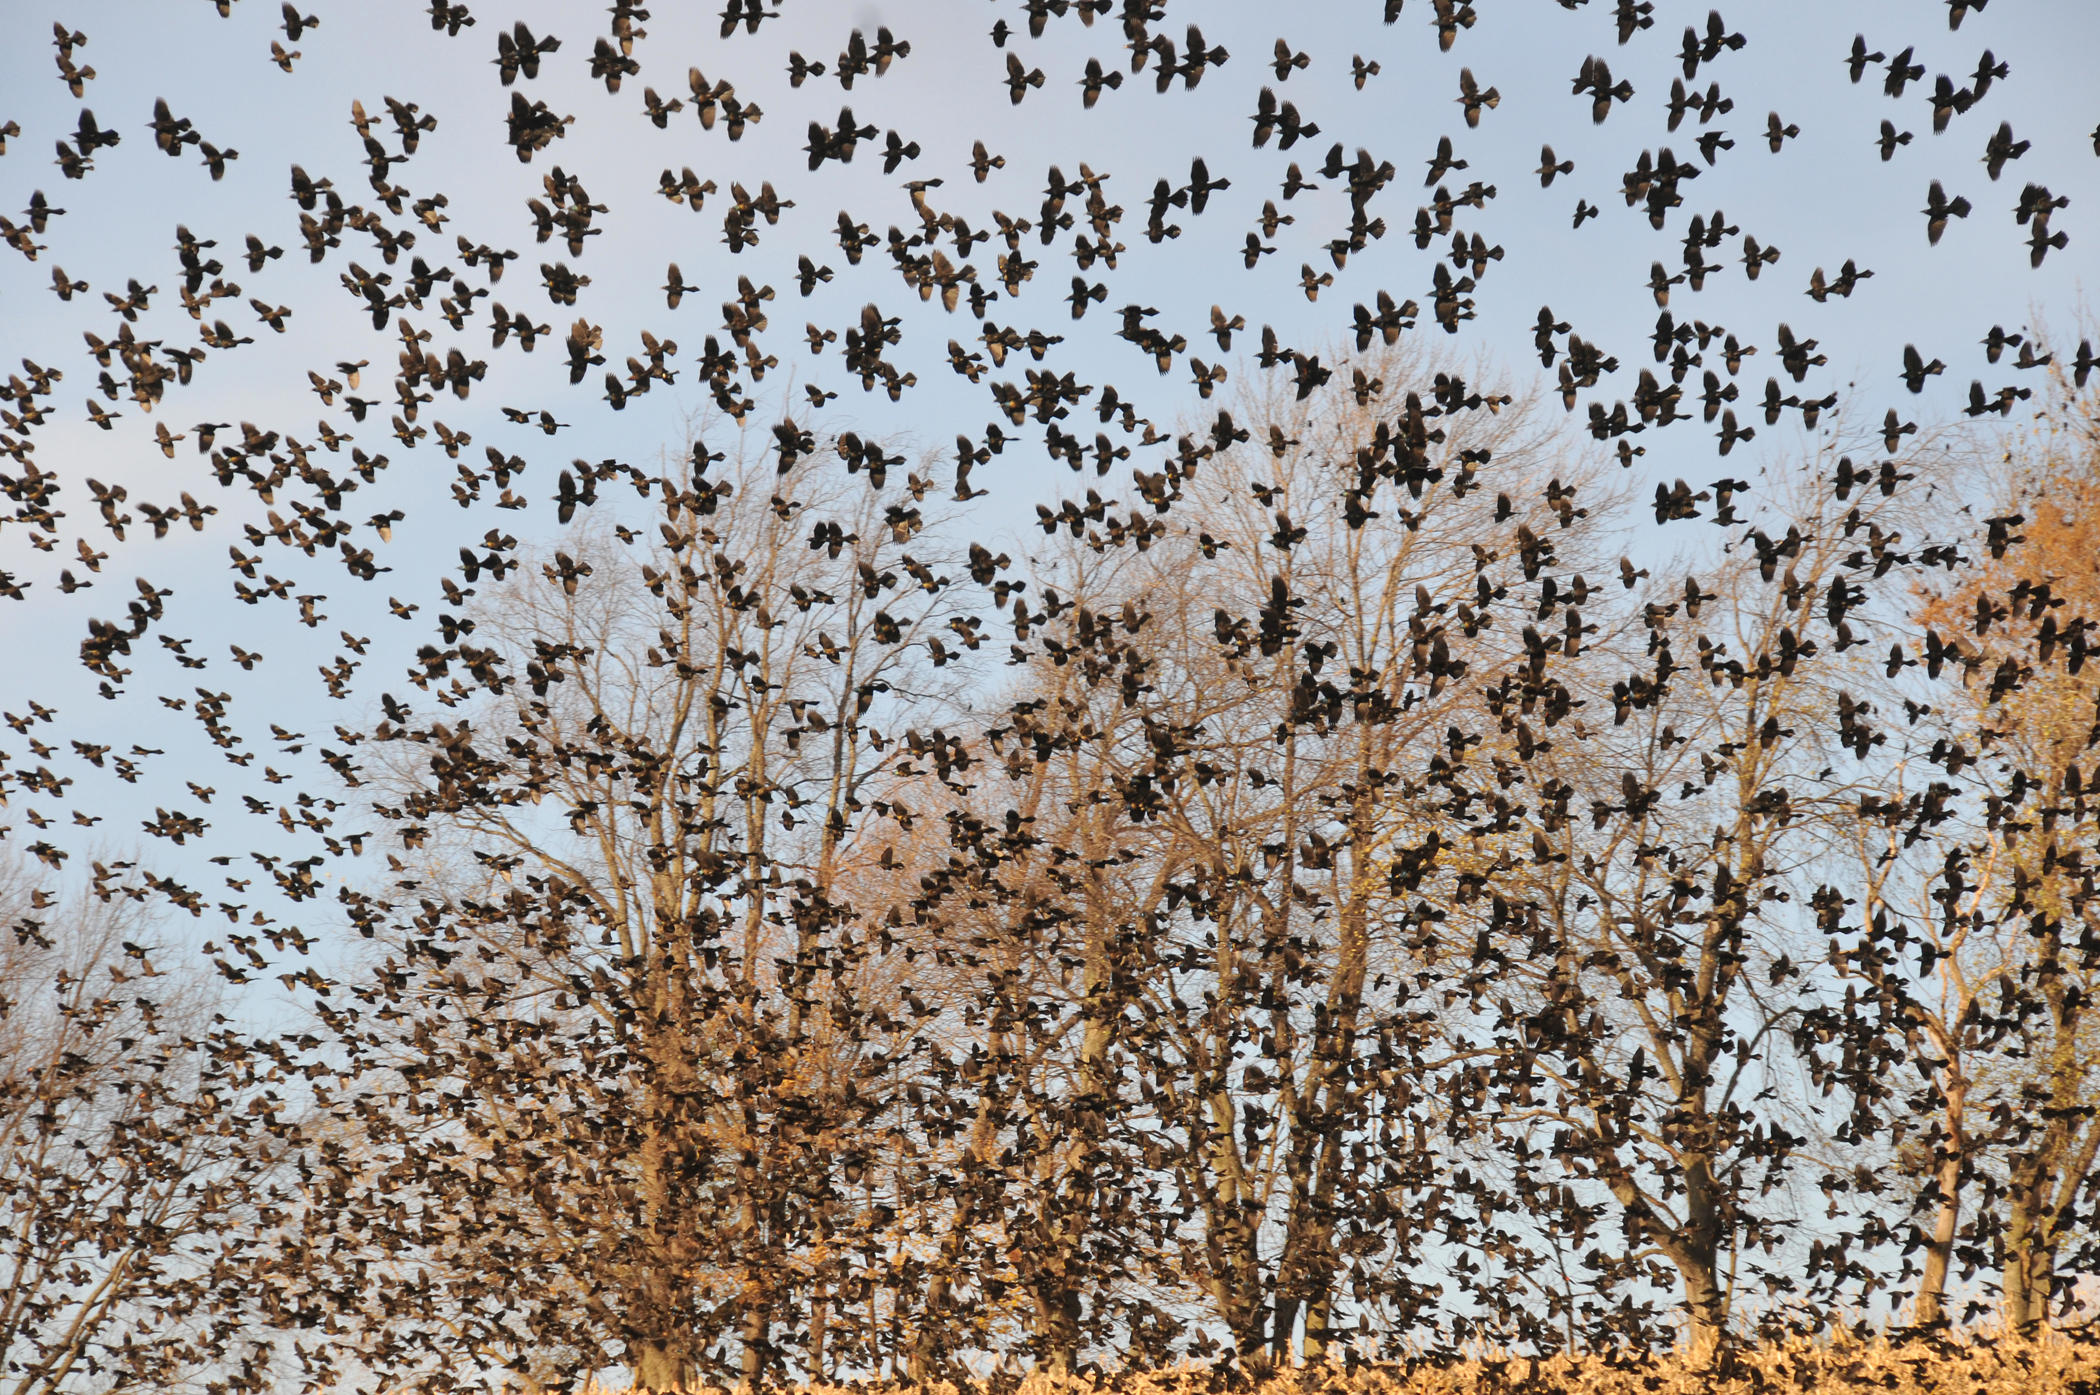 How do flocking birds move in unison?